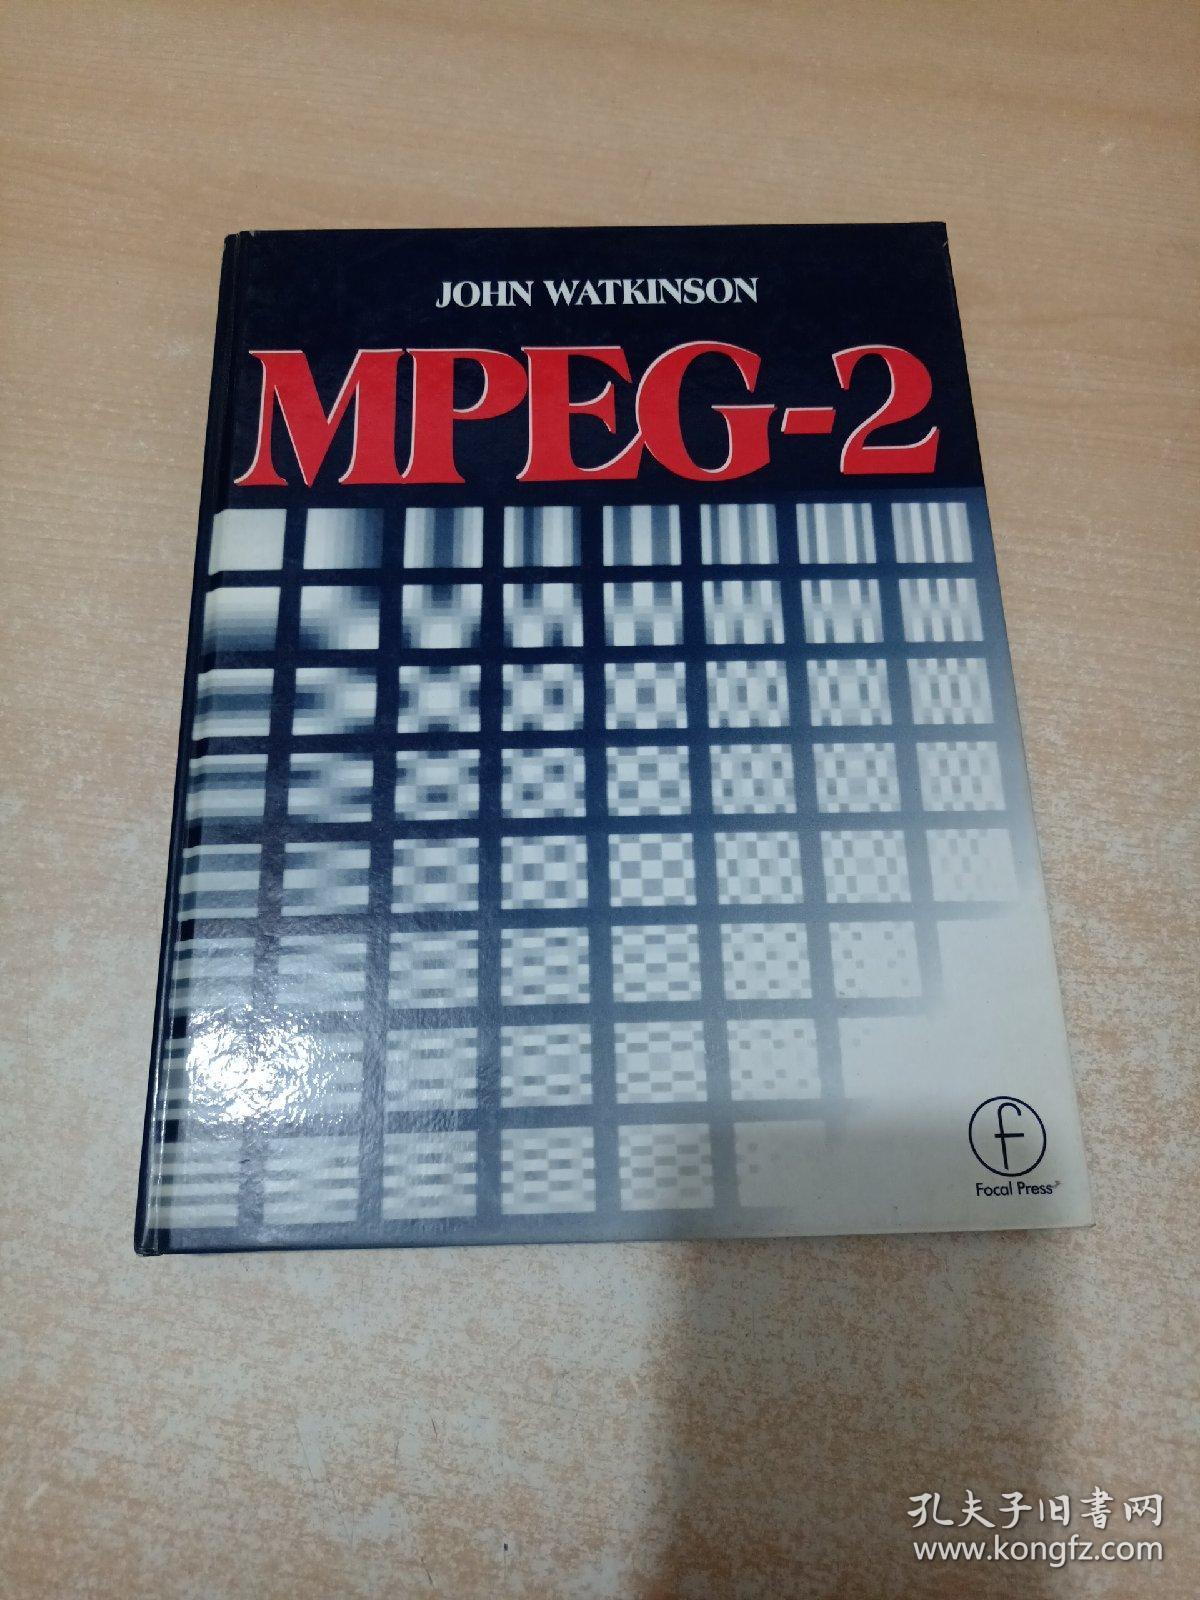 MPEG-2 John Watkinson